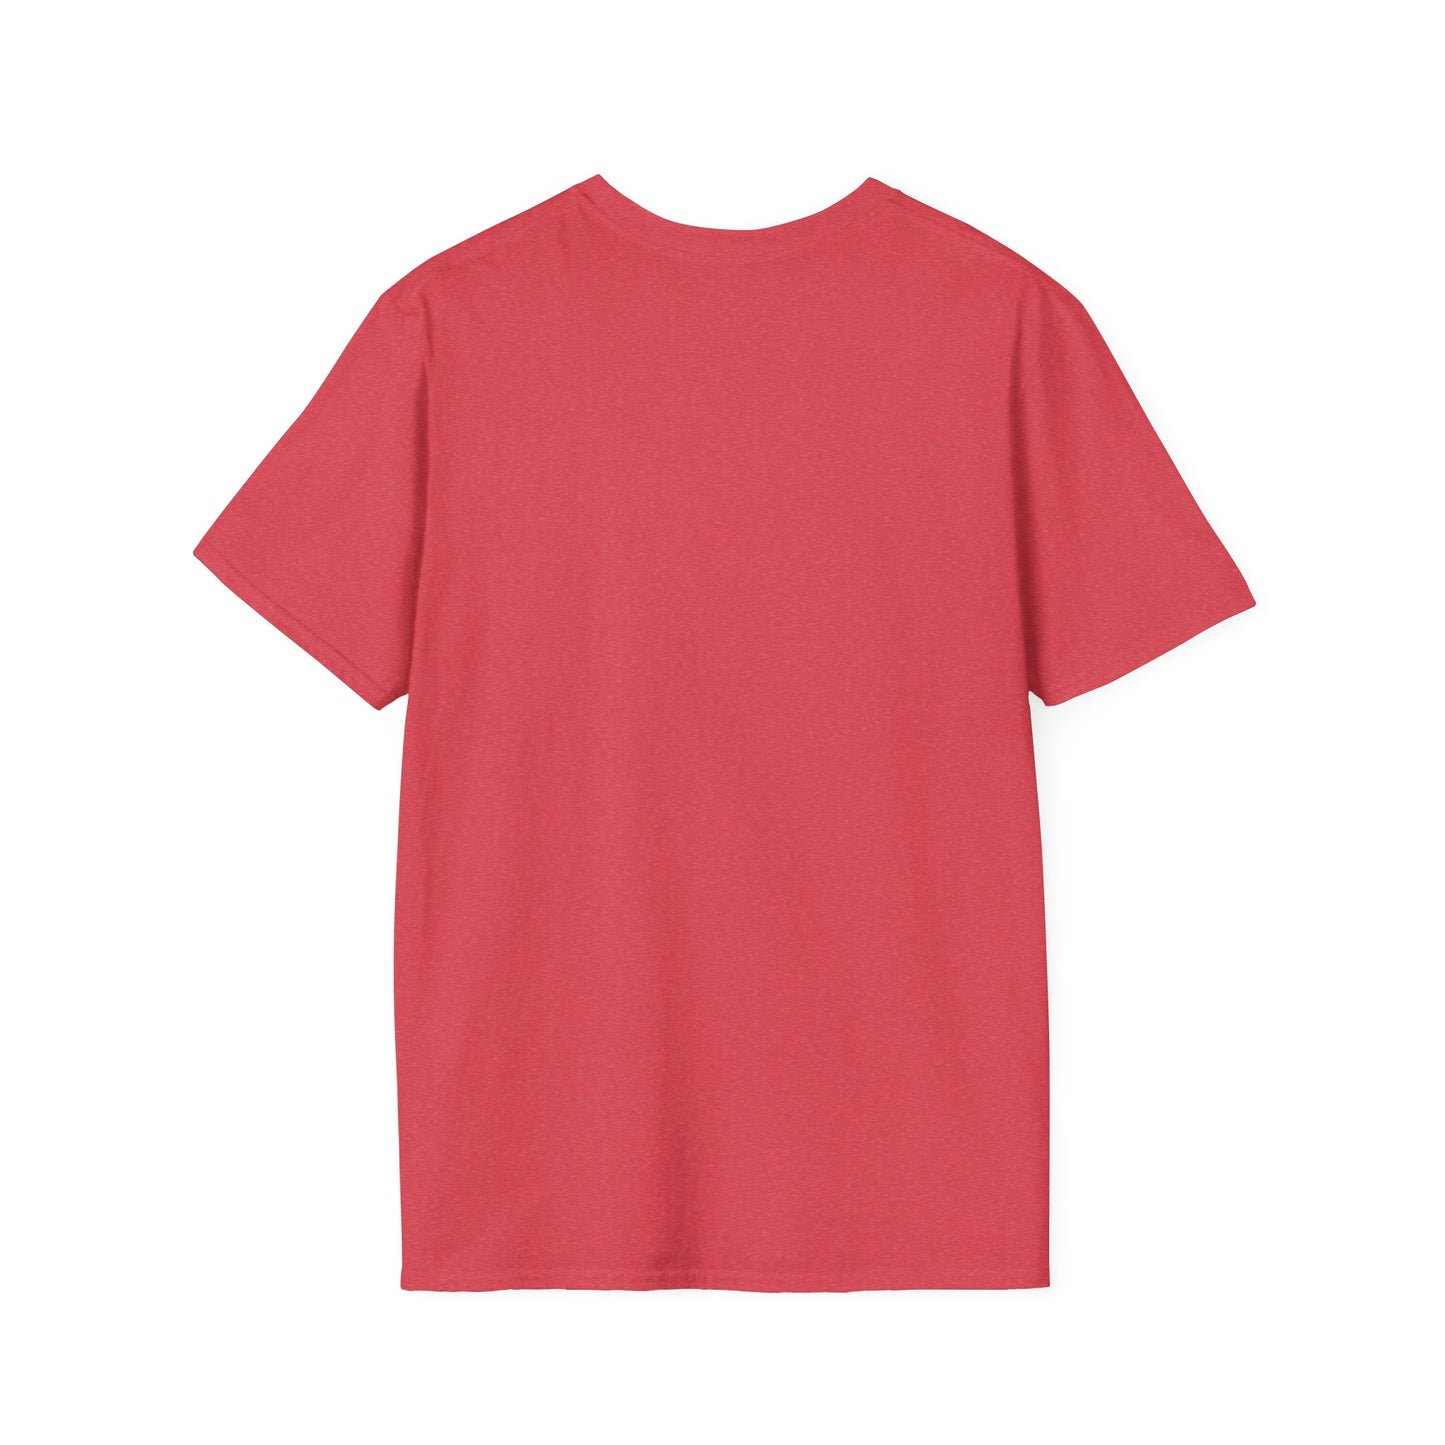 Fur Mama to Baby Mama - Unisex Softstyle T-Shirt